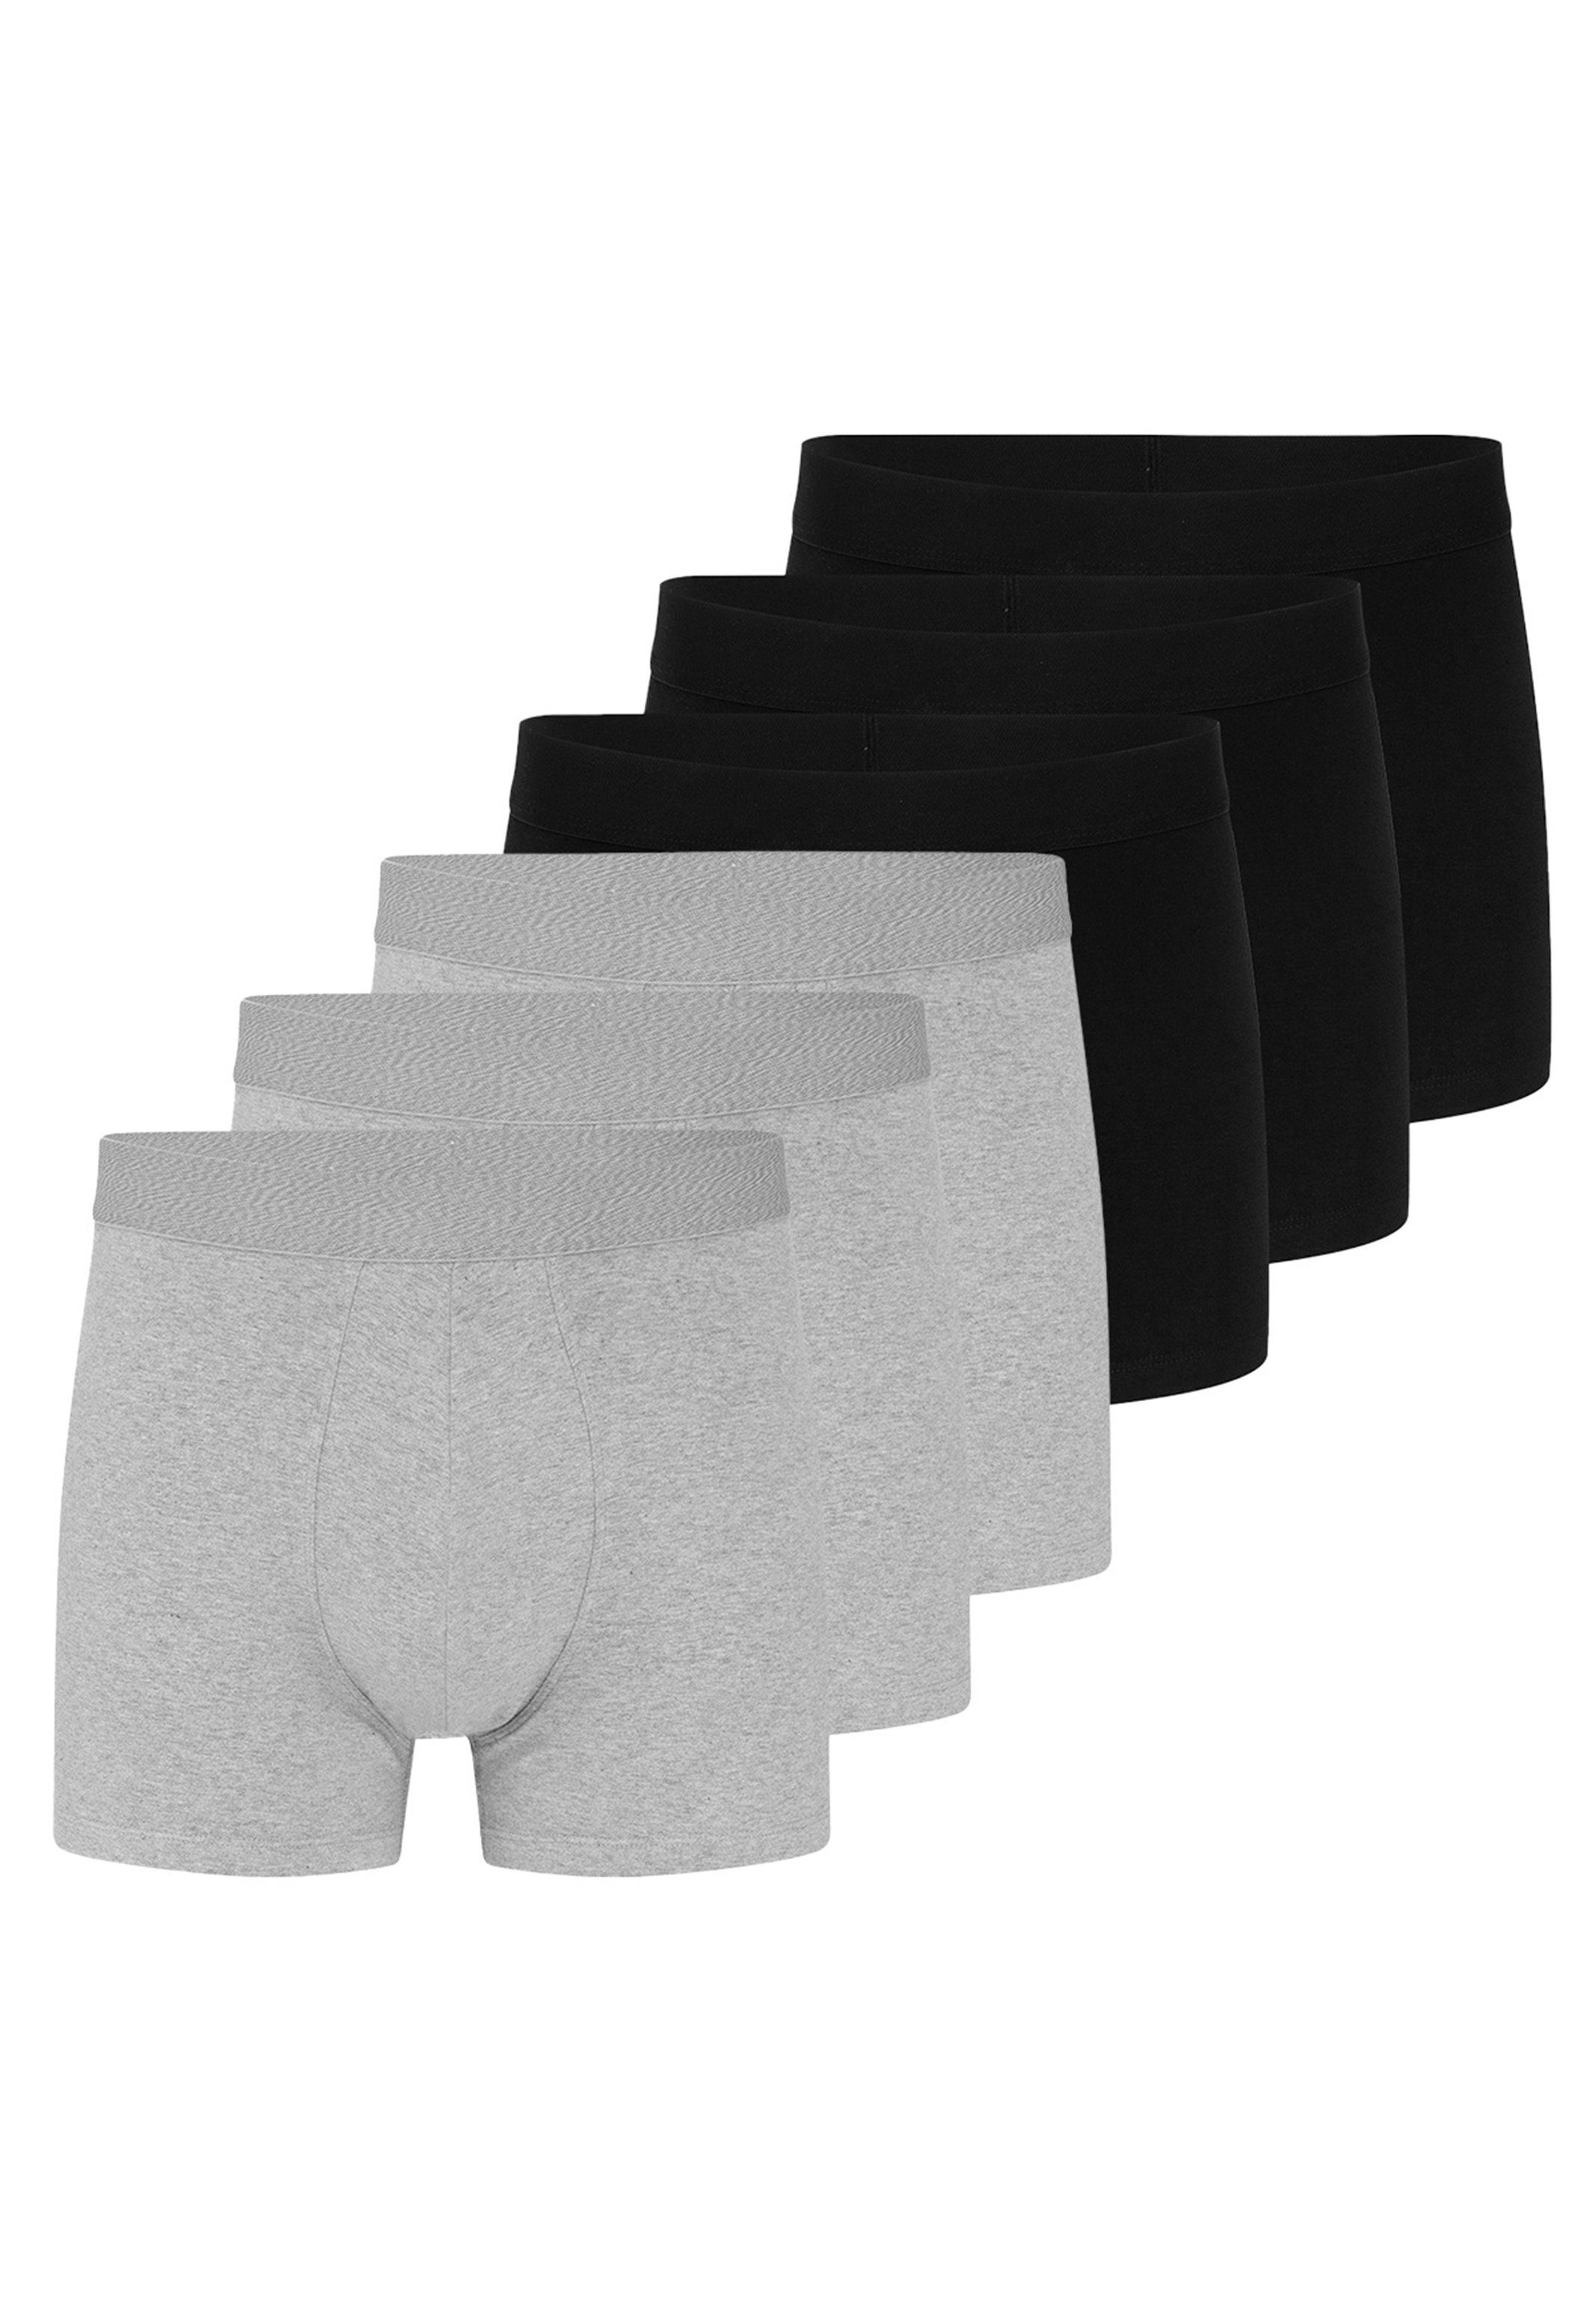 Almonu Retro Boxer 6er Pack Organic Cotton (Spar-Set, 6-St) Retro Short / Pant - Baumwolle - Ohne Eingriff - Atmungsaktiv Schwarz / Grau Melange